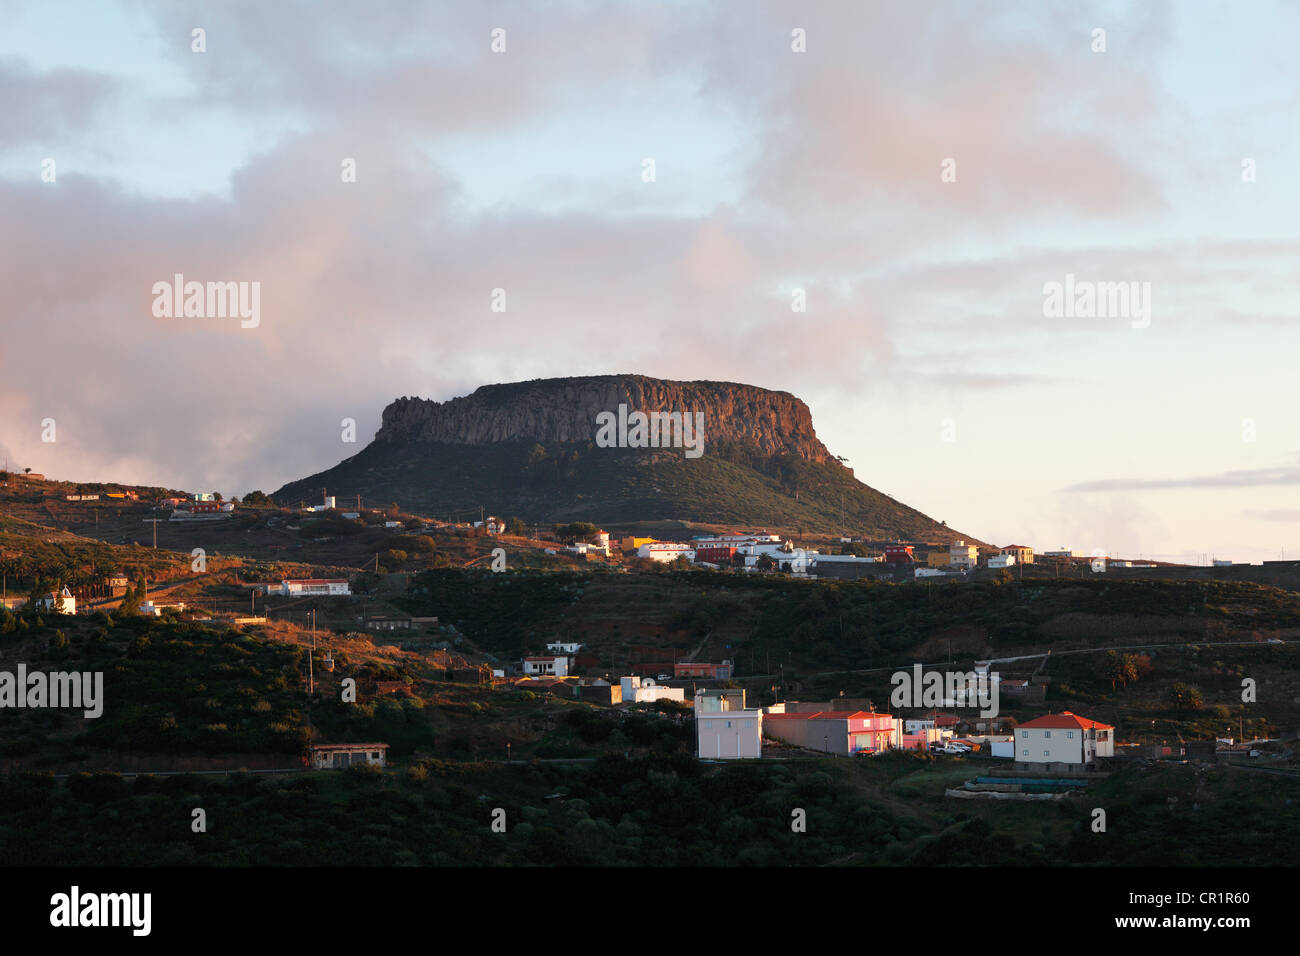 Fortaleza table mountain with villages of El Cercado und Chipude, La Gomera, Canary Islands, Spain, Europe Stock Photo